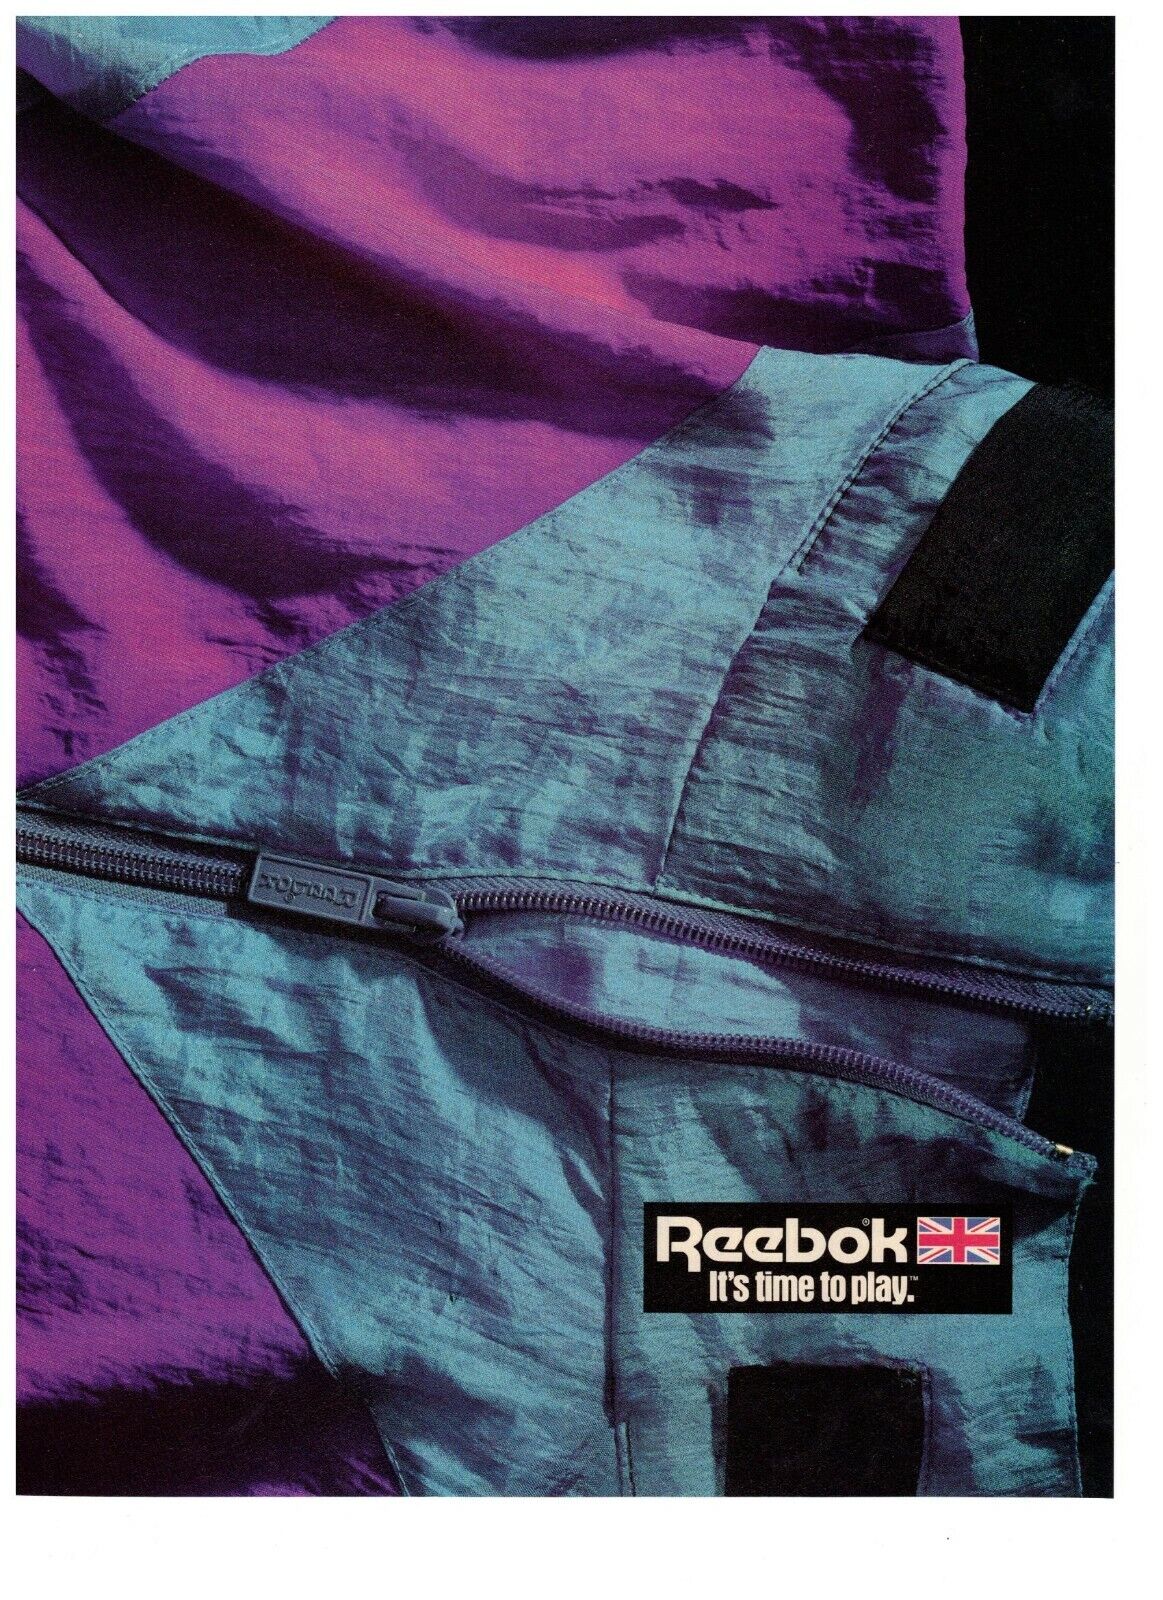 Reebok Time to Play Zipper Jacket Blue Purple Vintage 1988 Print Ad